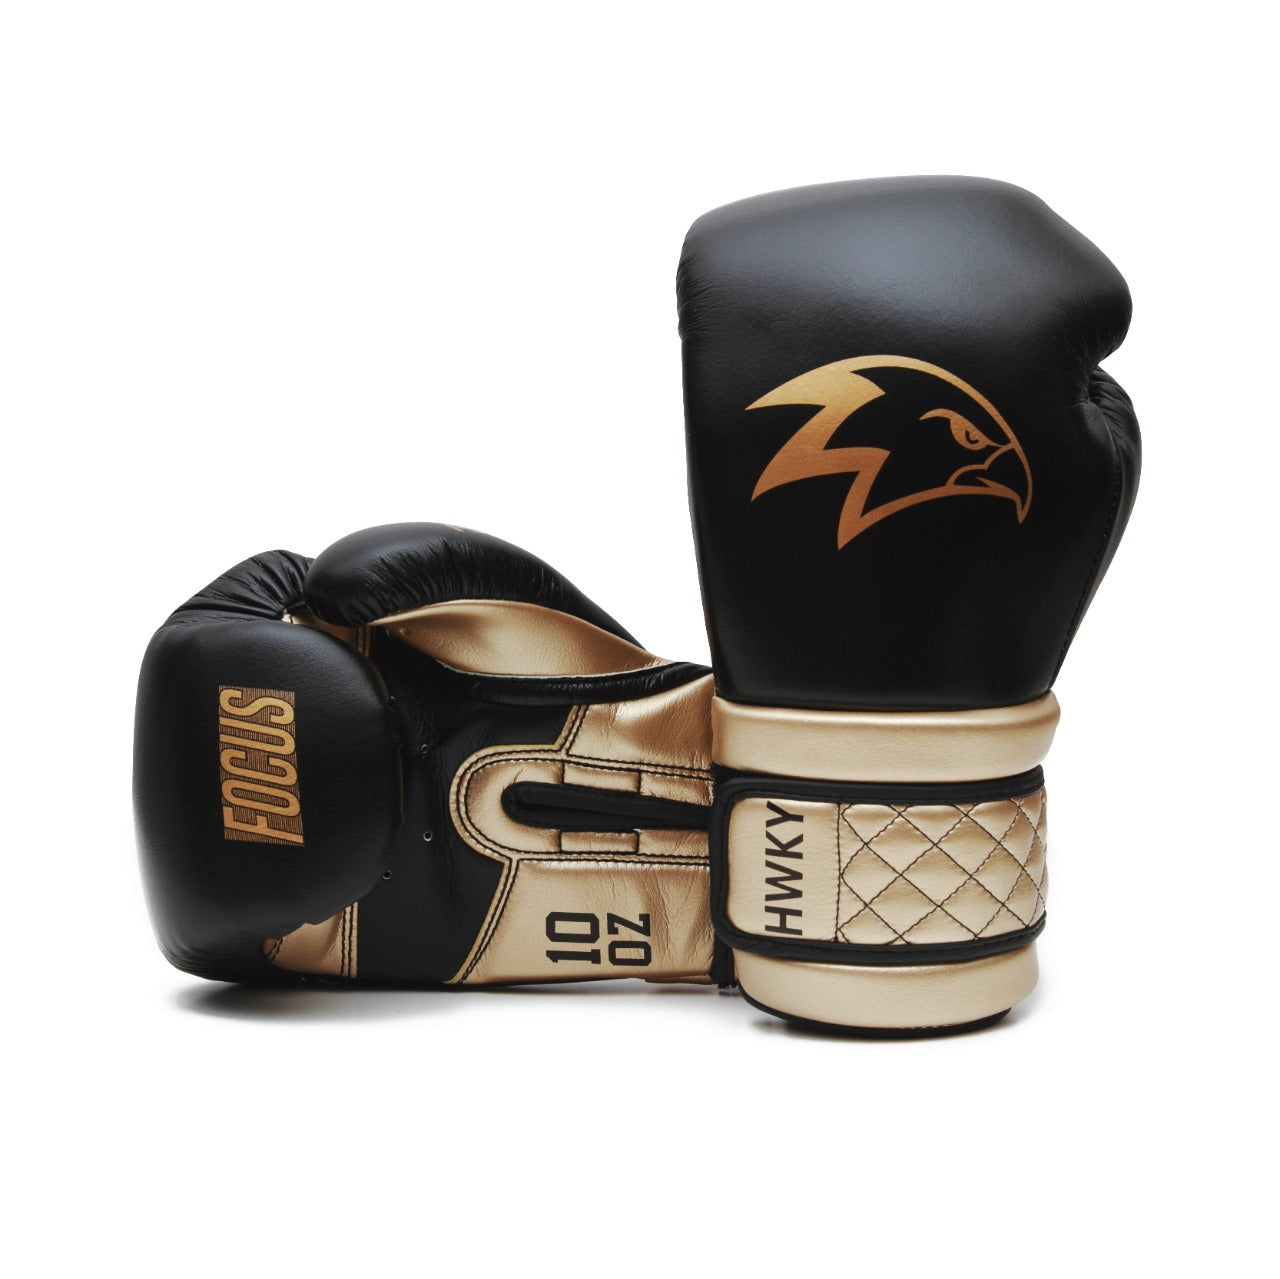 Focus Boxing Gloves | Onyx Gold + FREE HANDWRAP